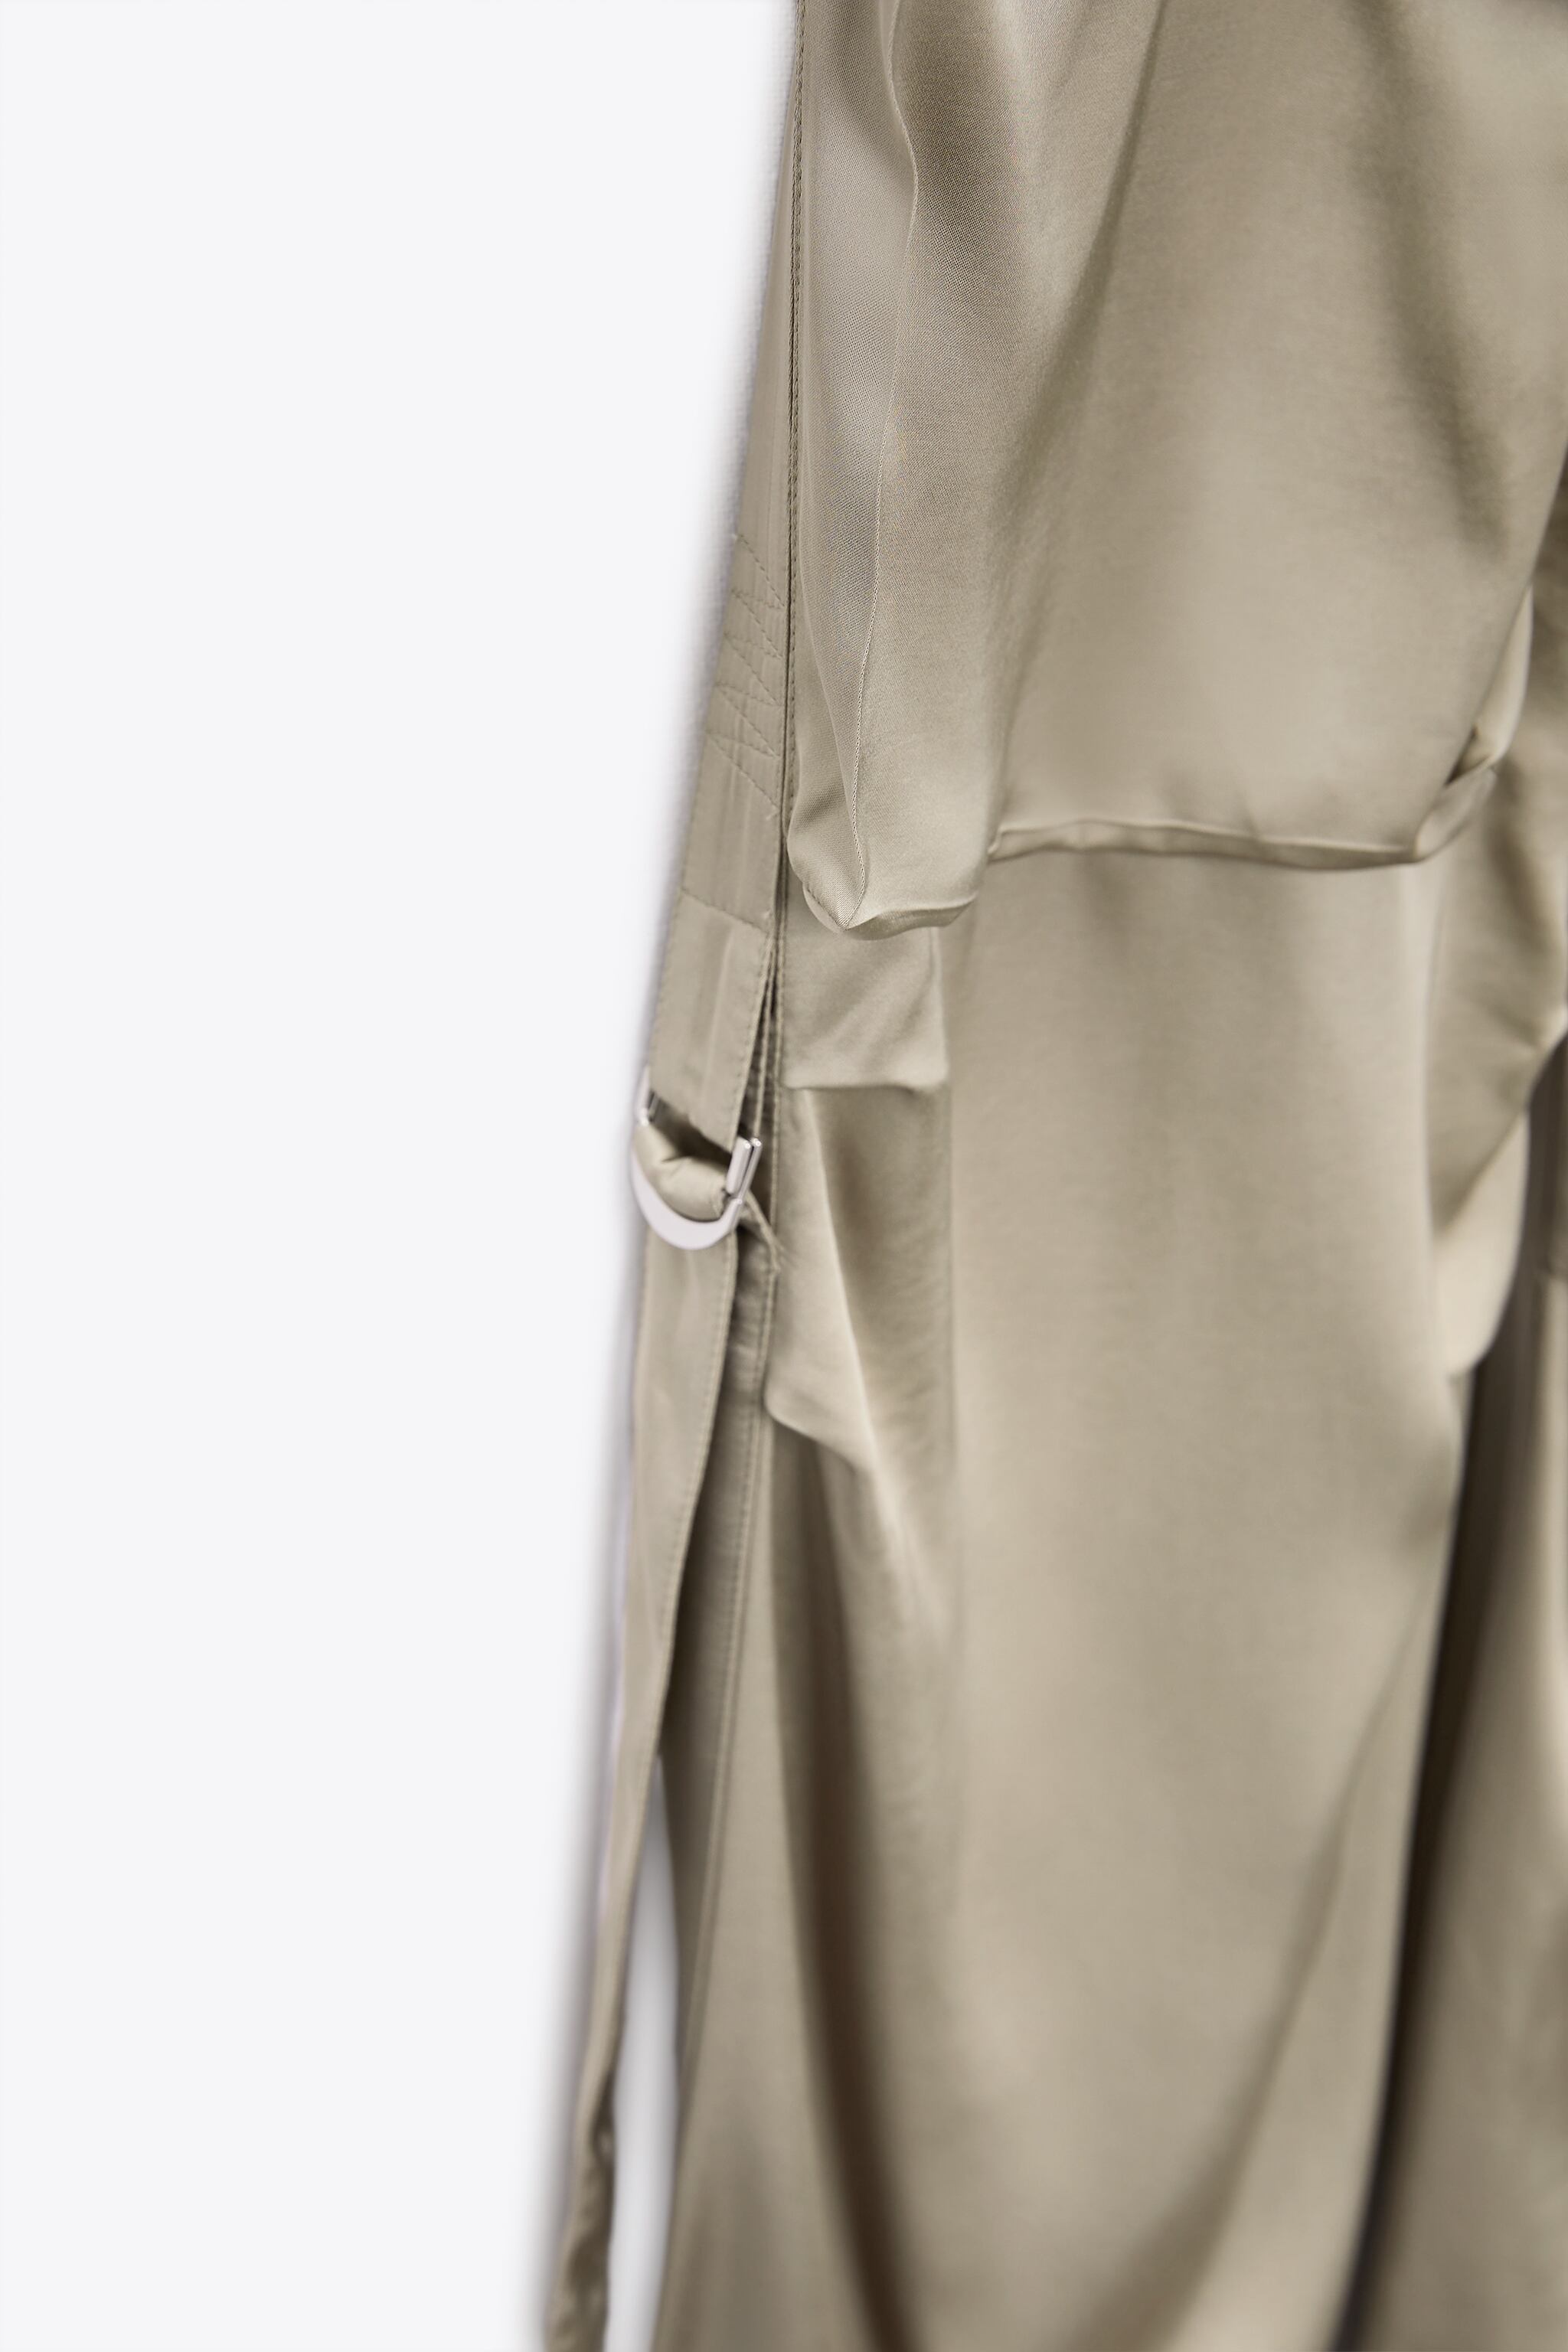 Zara SATIN EFFECT CARGO PANTS | Square One